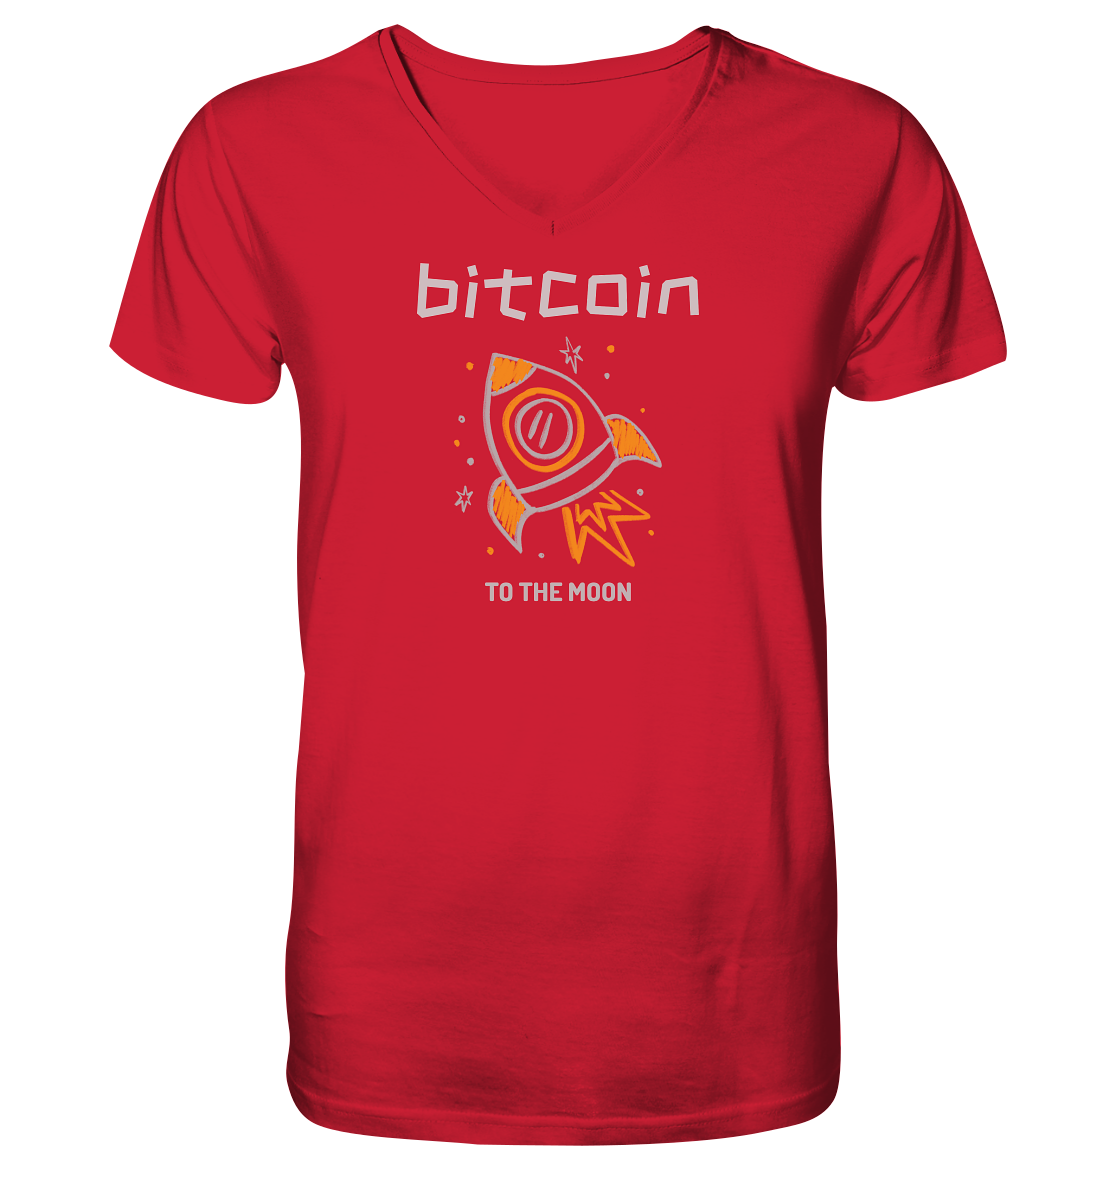 Bitcoin to the moon - Mens Organic V-Neck Shirt